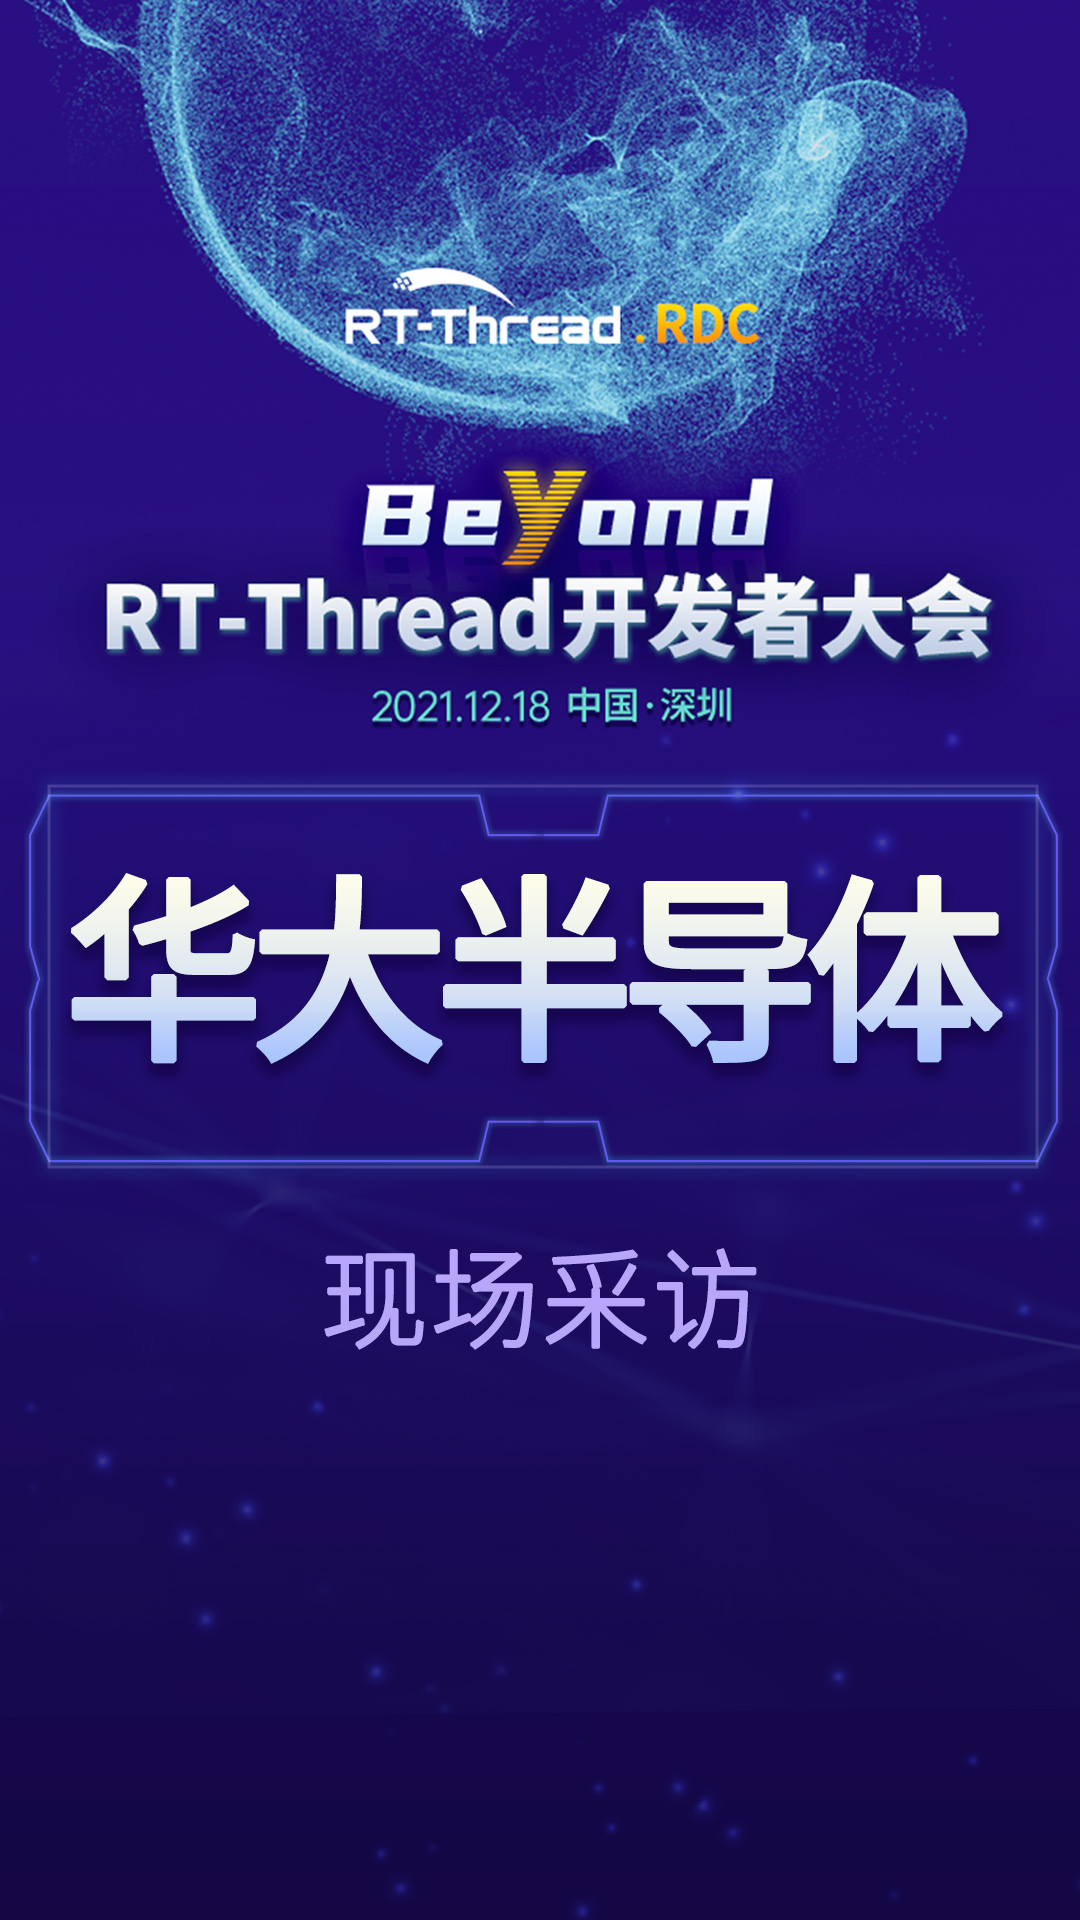 RT-Thread开发者大会-华大半导体现场采访#嵌入式开发 